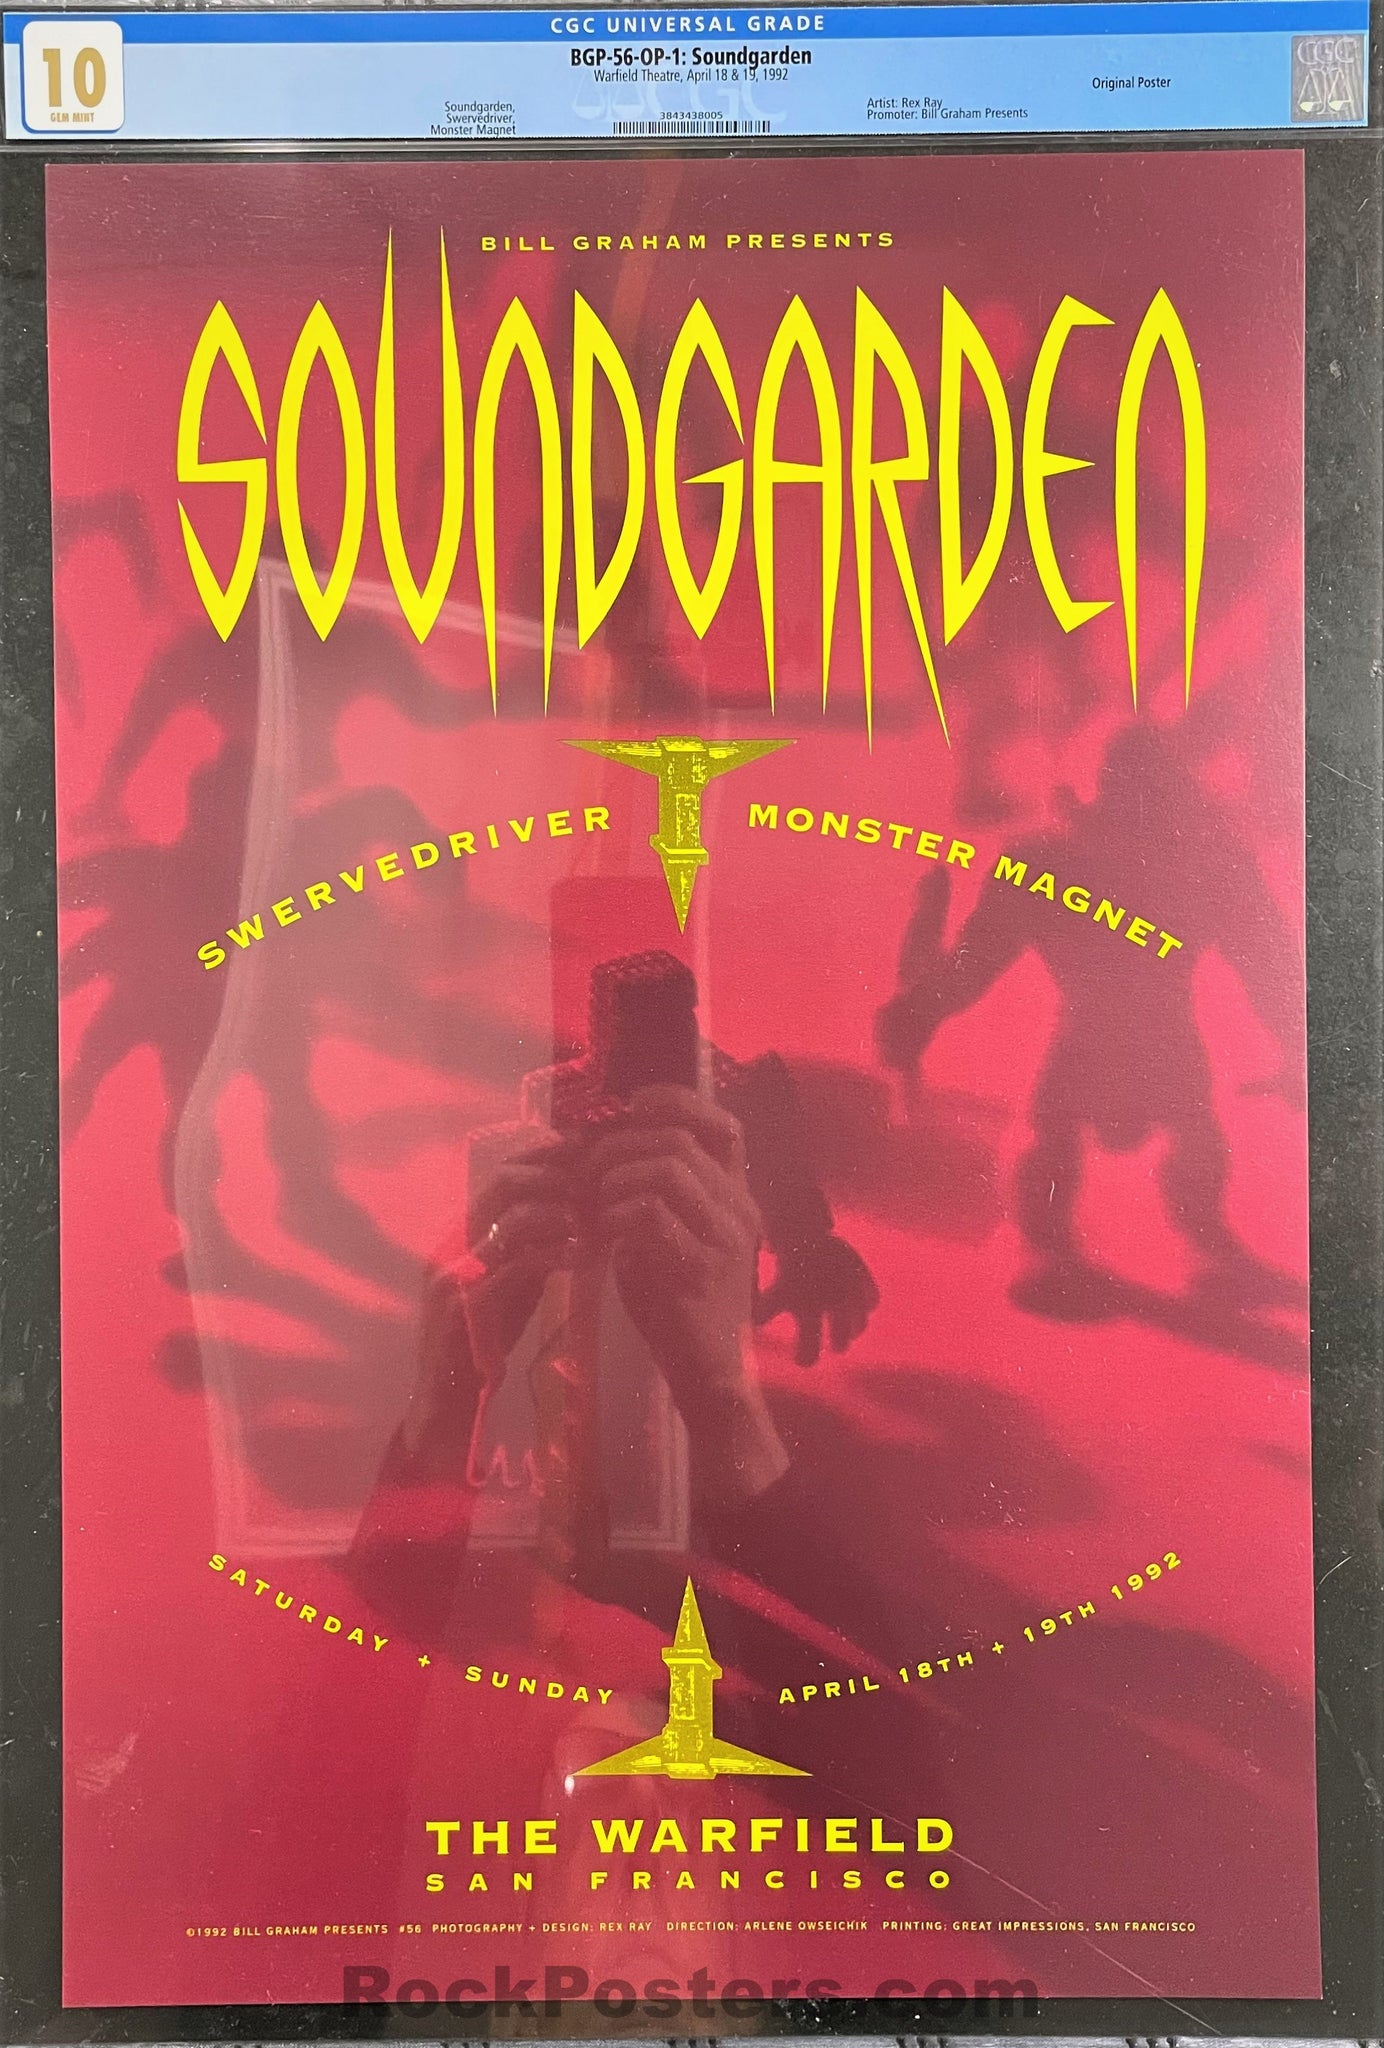 AUCTION - BGP-56 - Soundgarden - 1992 Poster - Warfield Theater - CGC Graded 10 GEM MINT